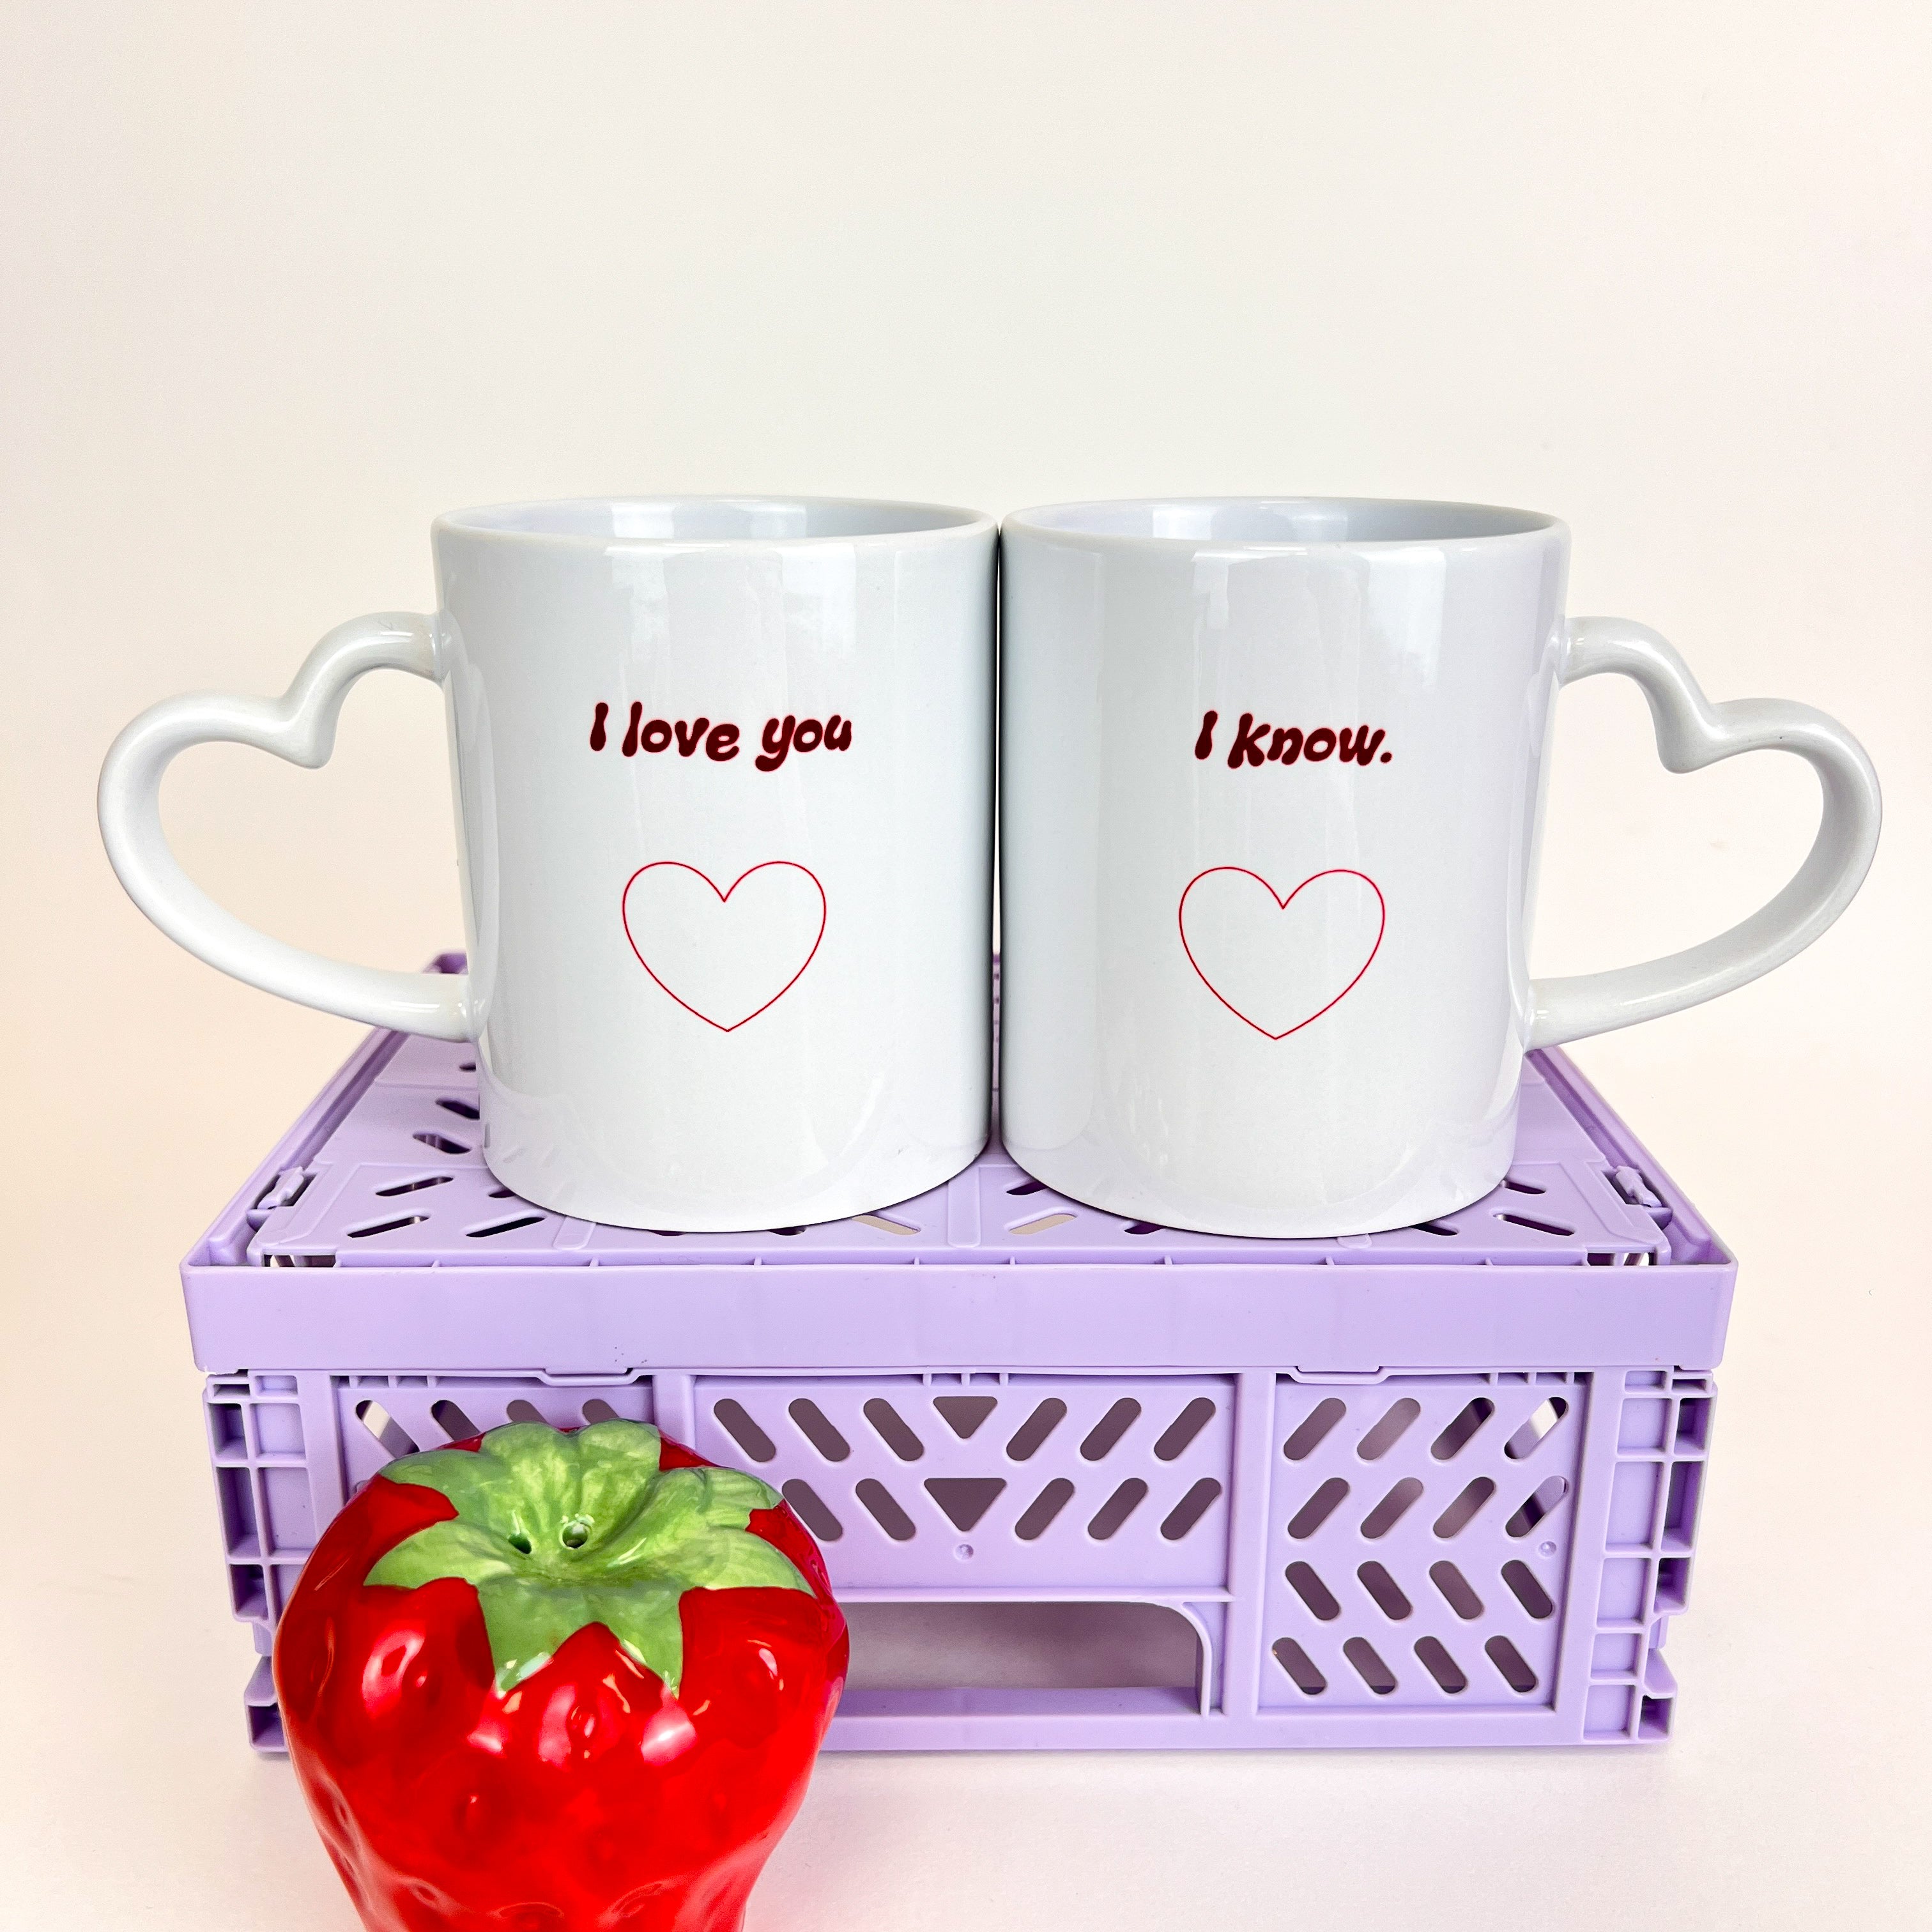 I love you. I know. mug set